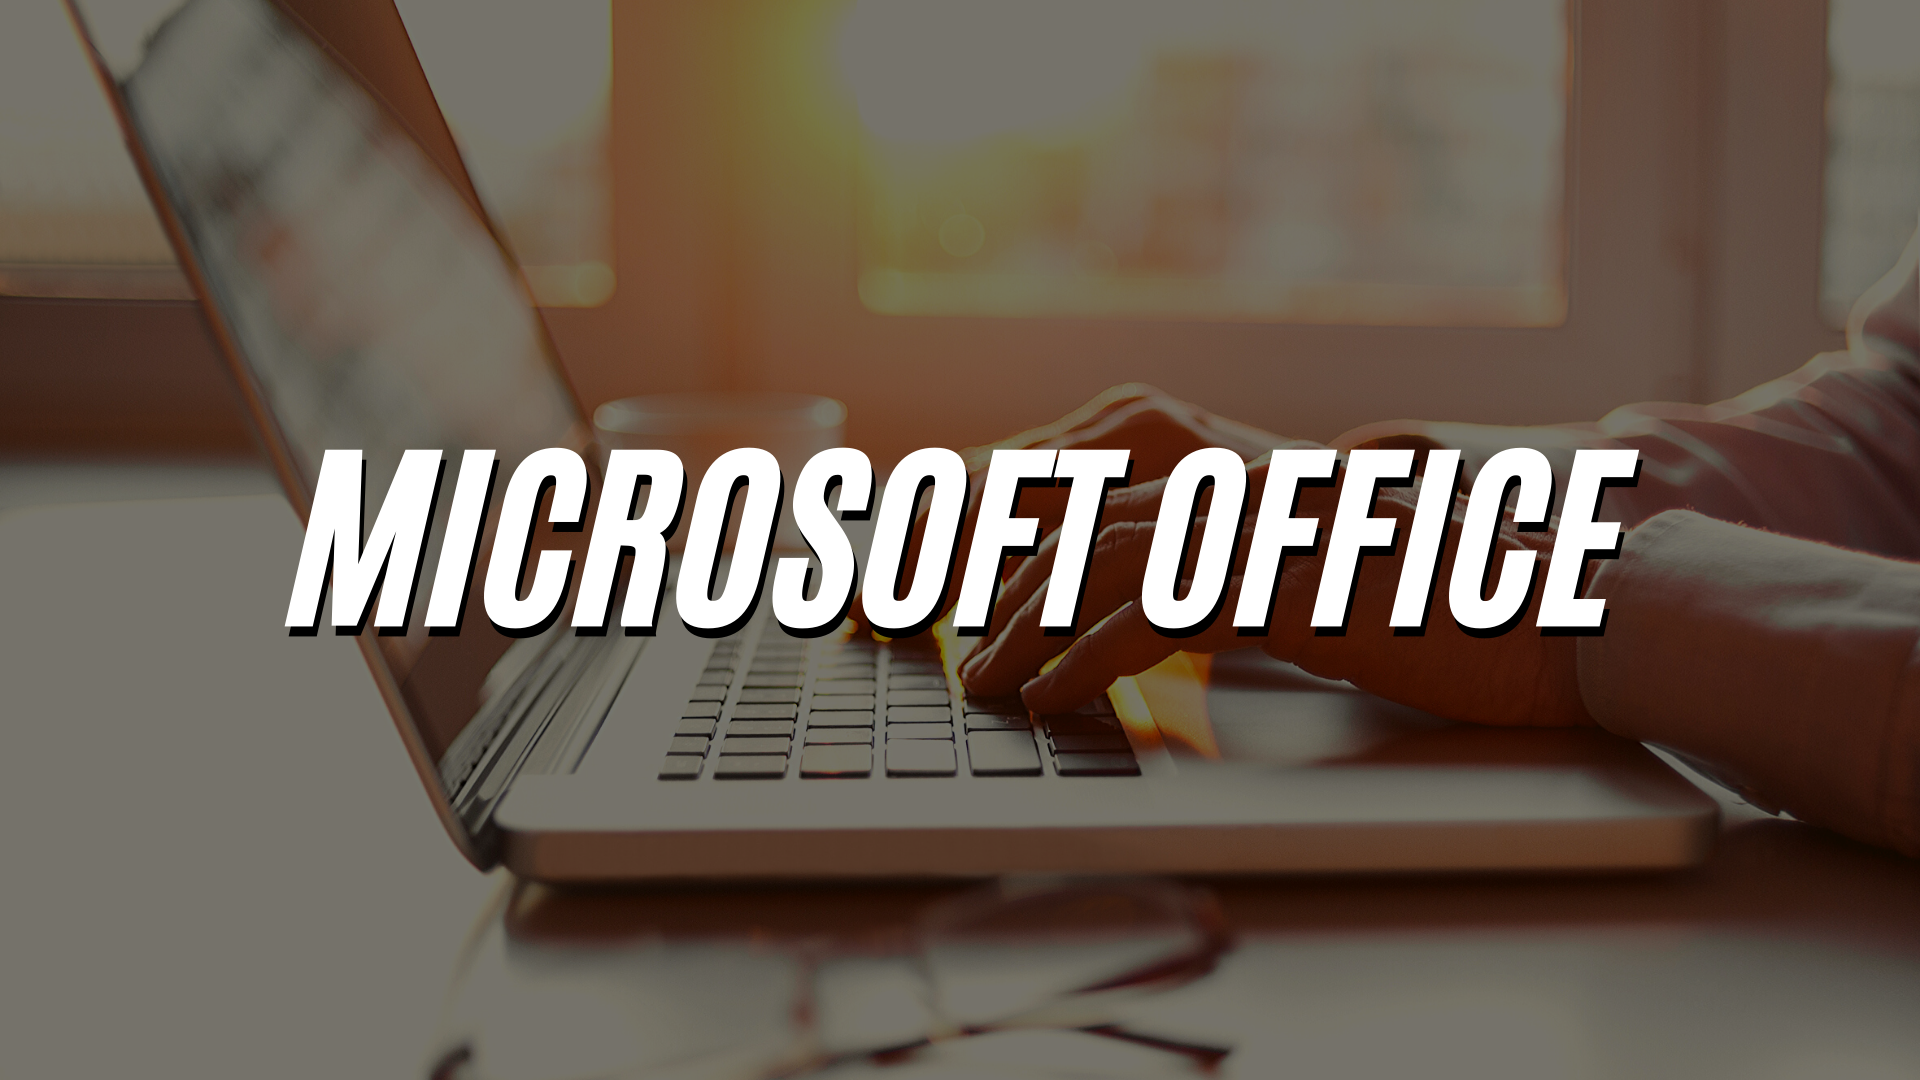 Microsoft Office WebSite Header Image